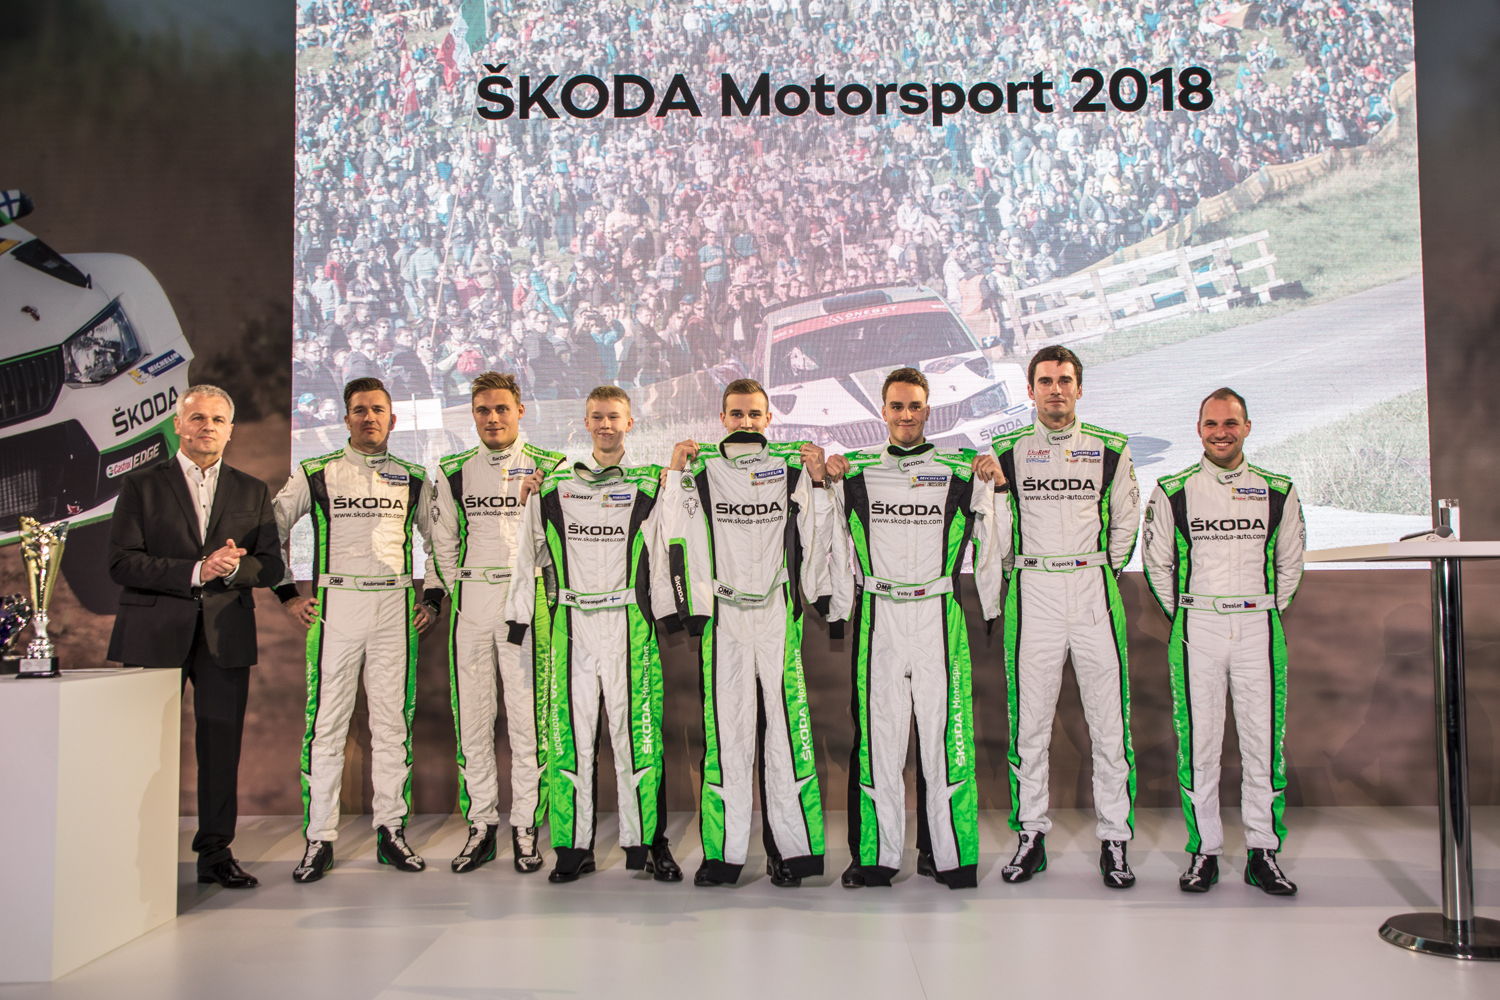 ŠKODA Motorsport presented the crews for 2018 at press conference in Mladá Boleslav on 12 December 2017.